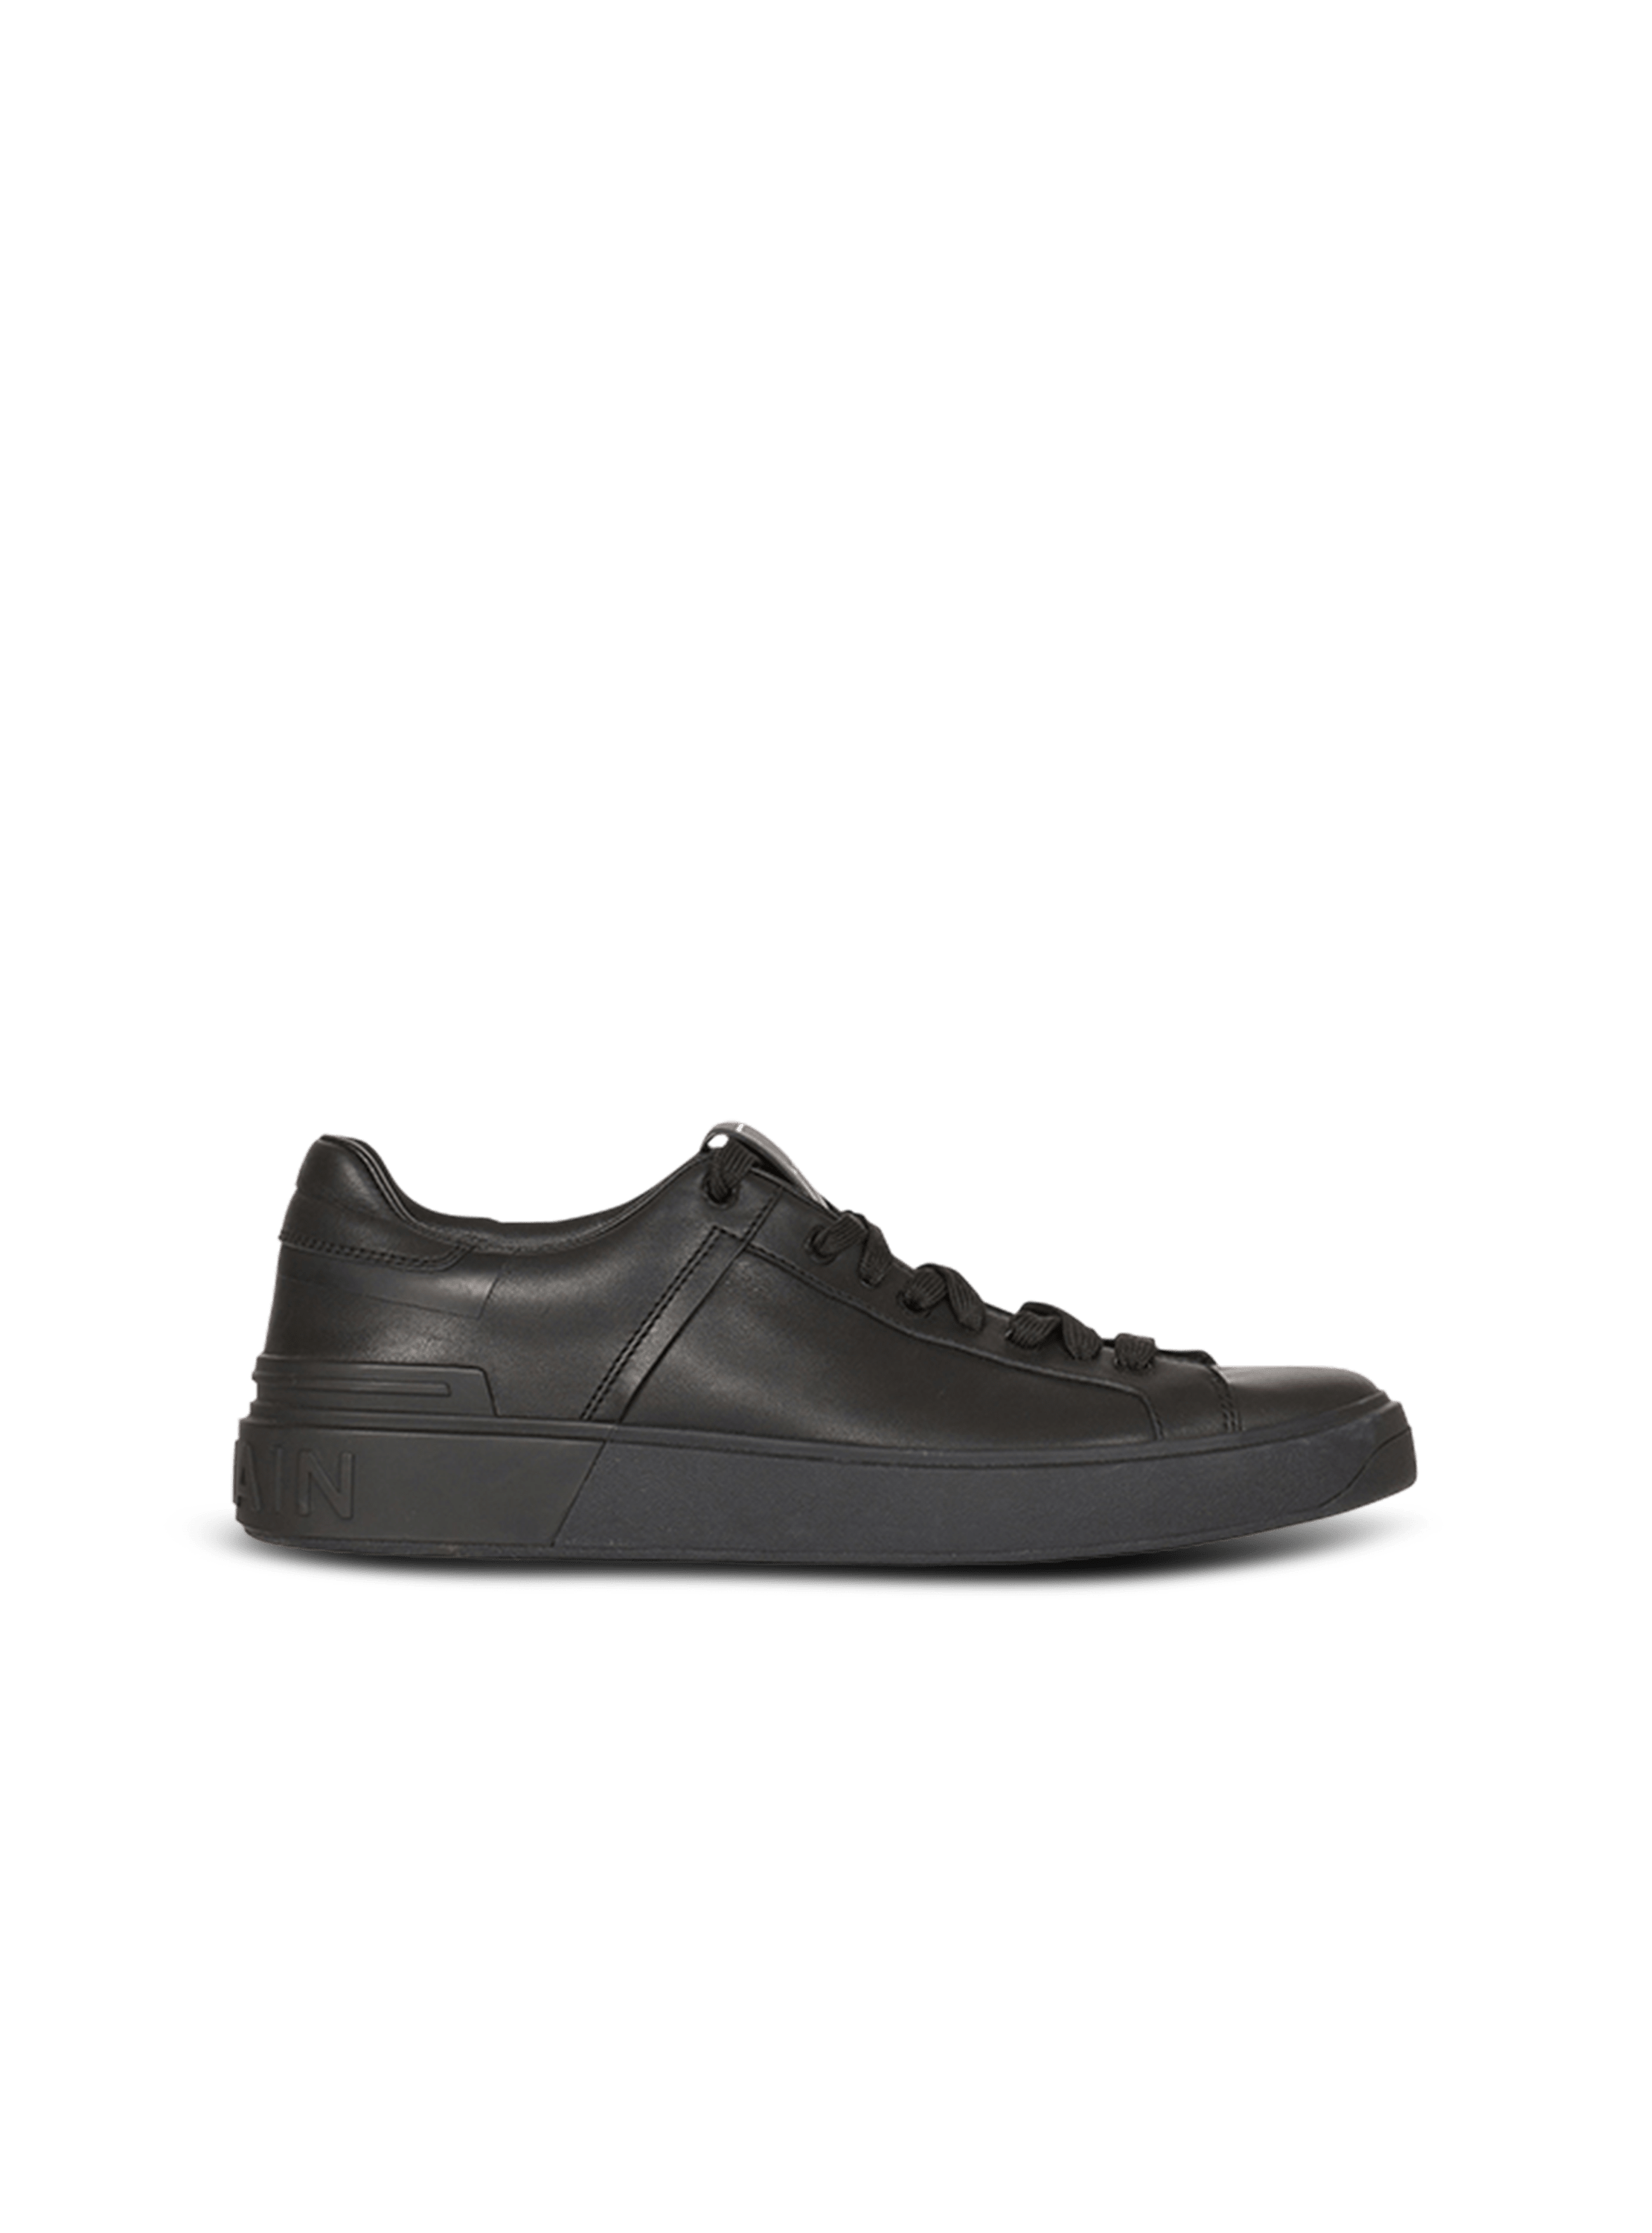 Sneakers B-Court aus Leder, schwarz, hi-res